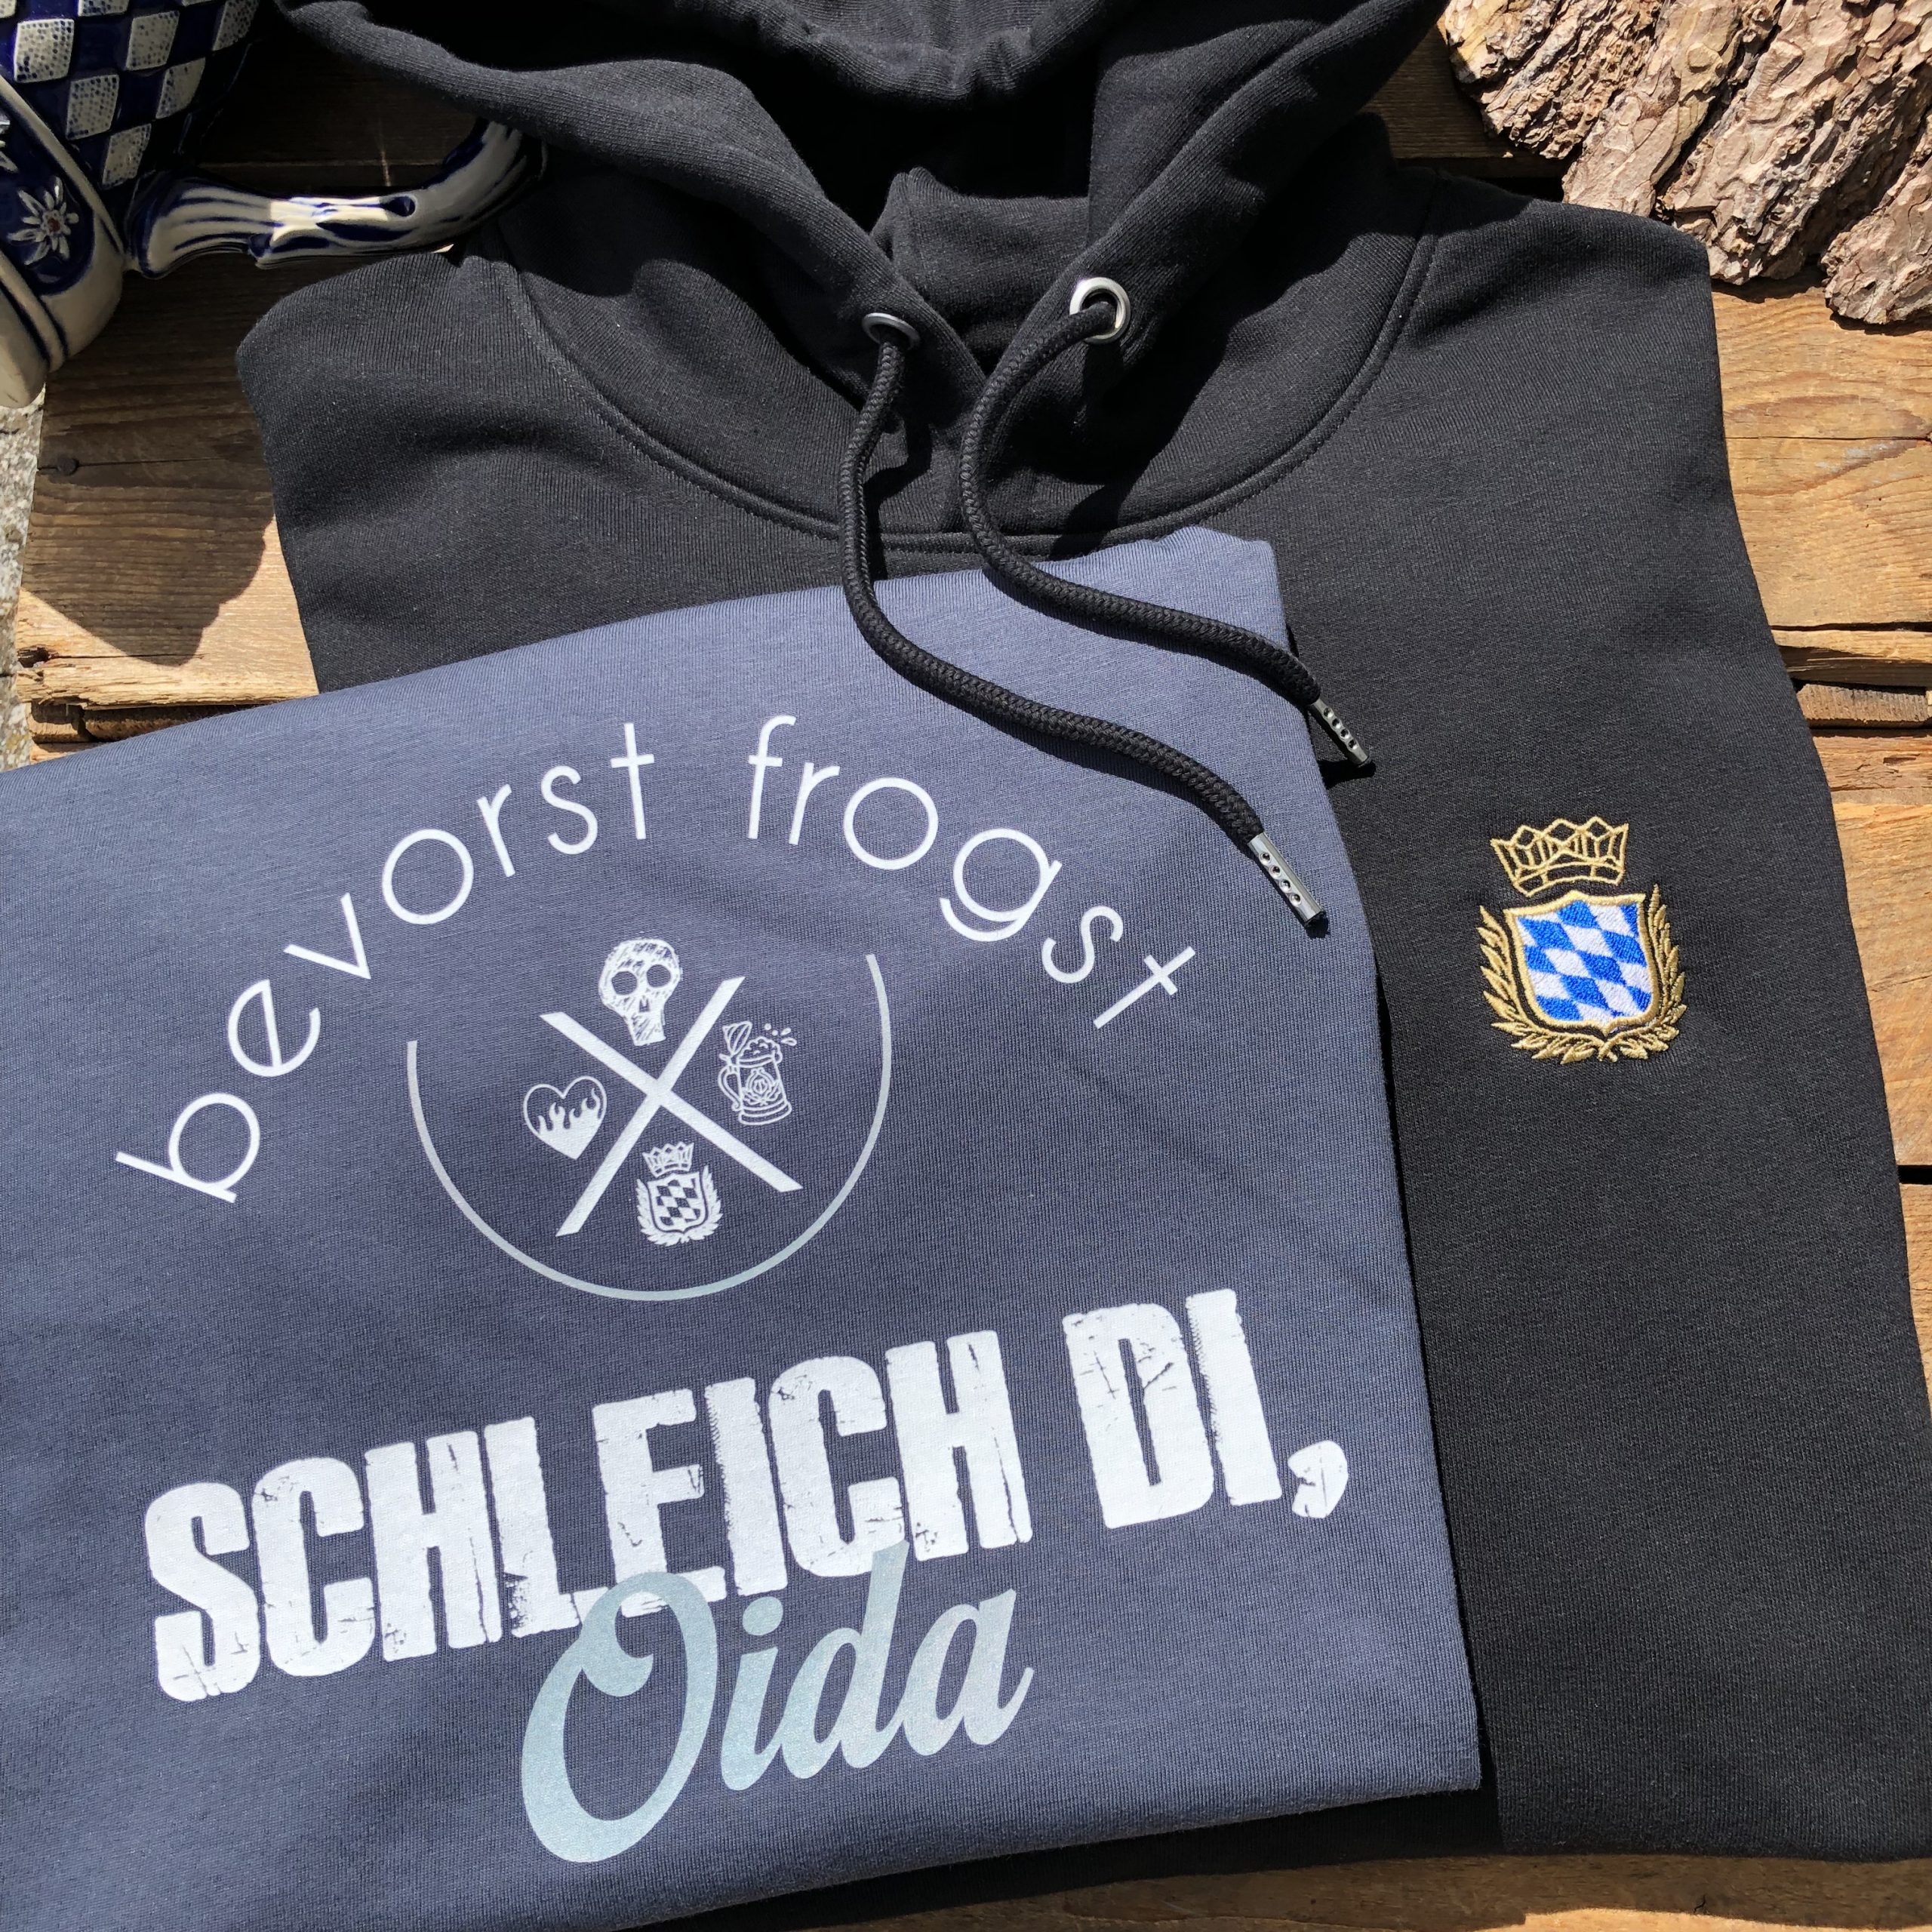 Schleich Di T-Shirt Zuckabrot Edition by mundart Fashion